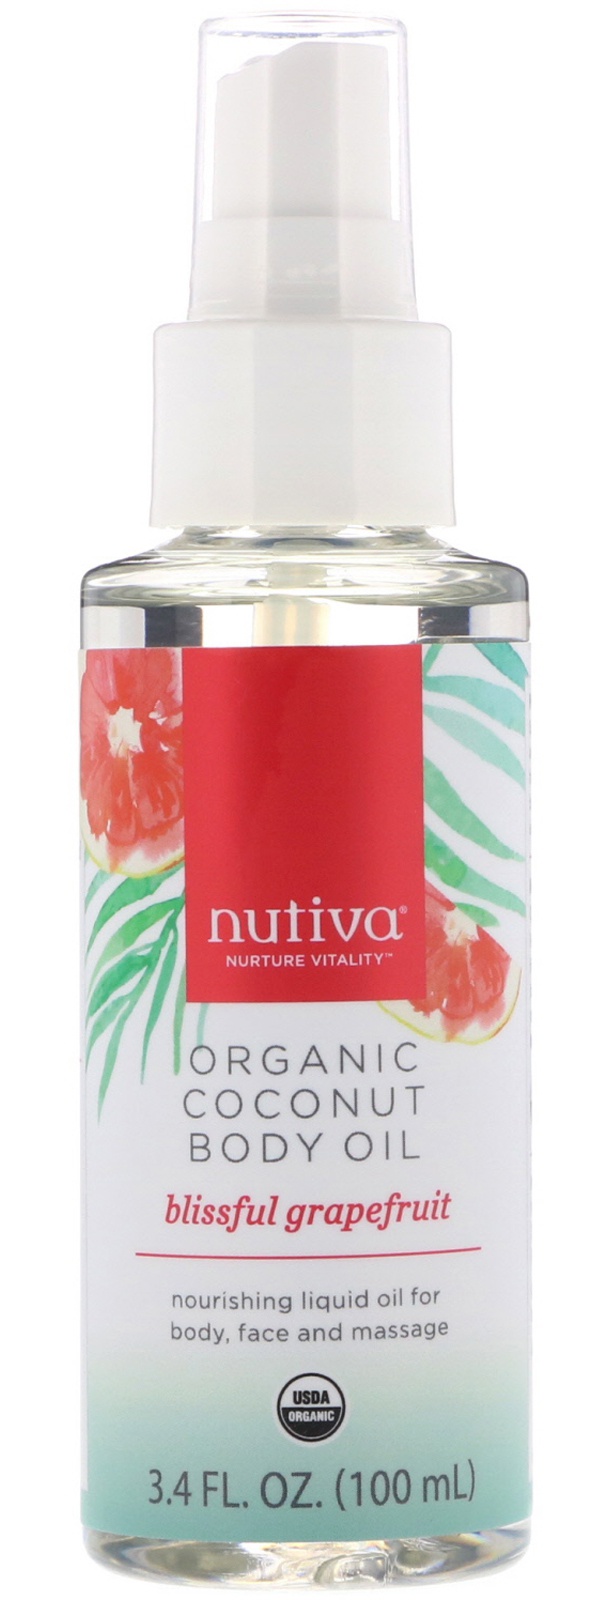 Nutiva Organic Coconut Body Oil, Blissful Grapefruit